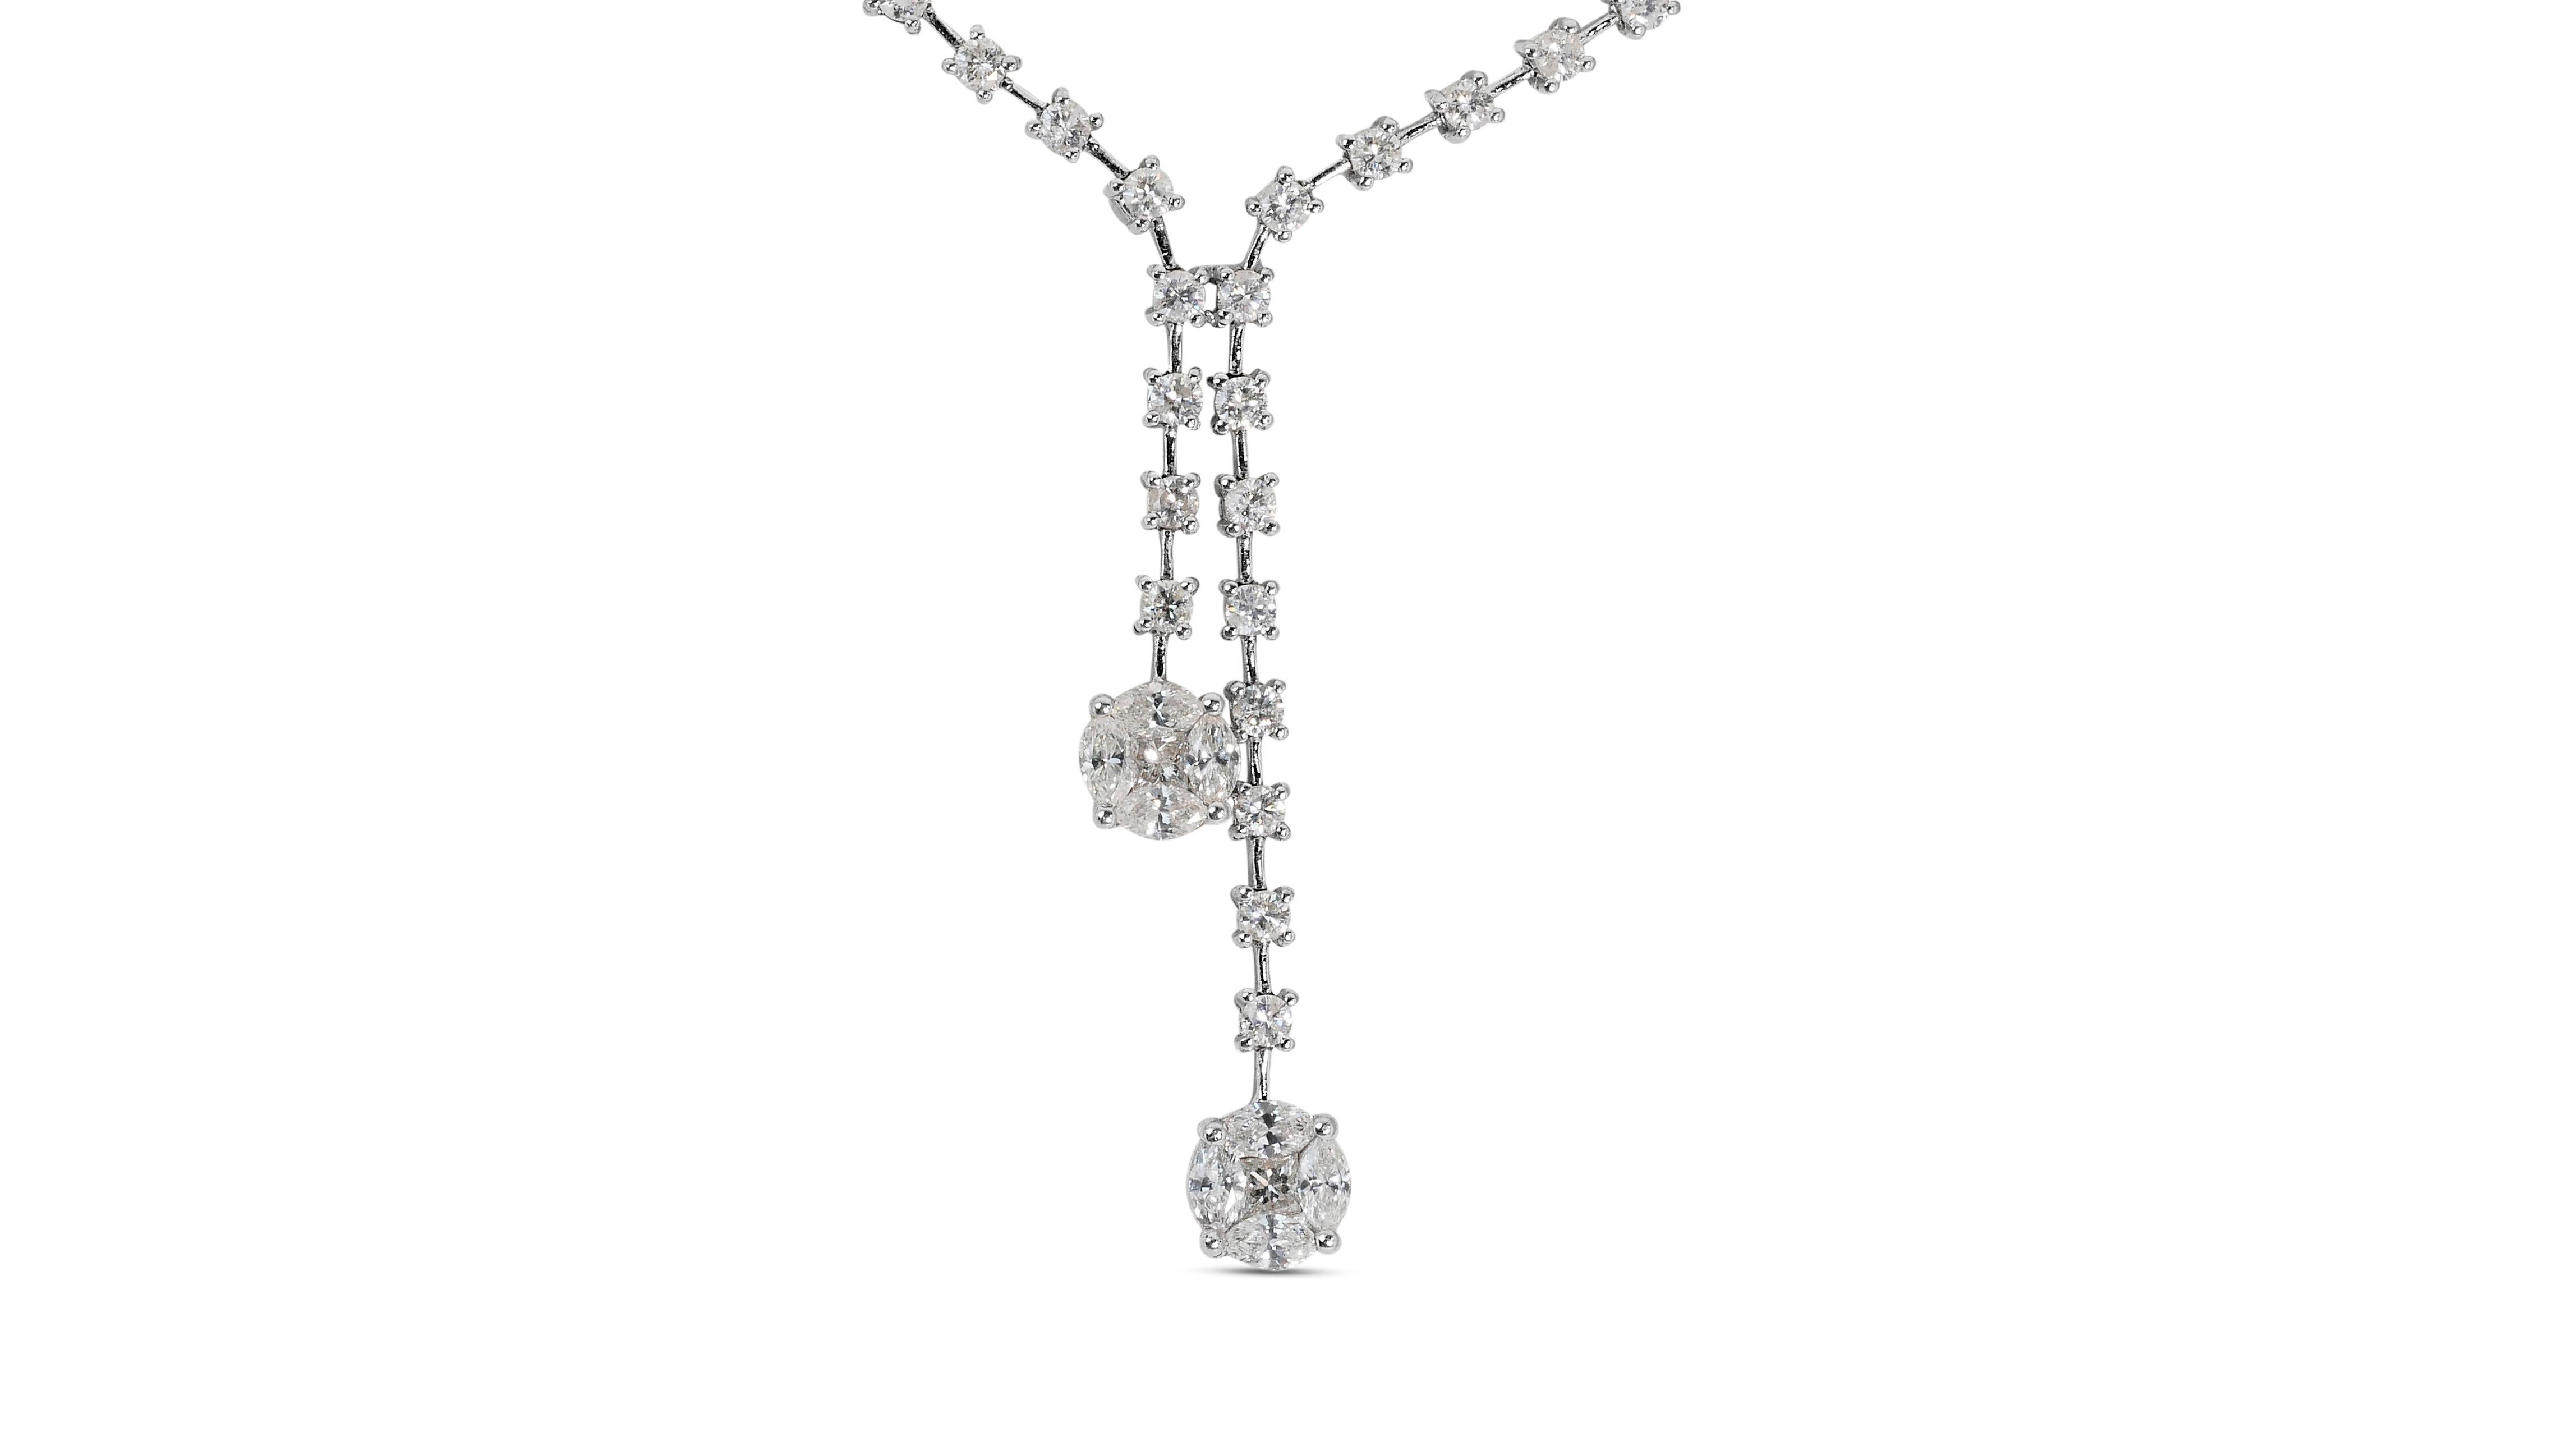 Marquise Cut Glamorous 18k White Gold Drop Necklace w/ 5.06ct Natural Diamonds IGI Cert For Sale